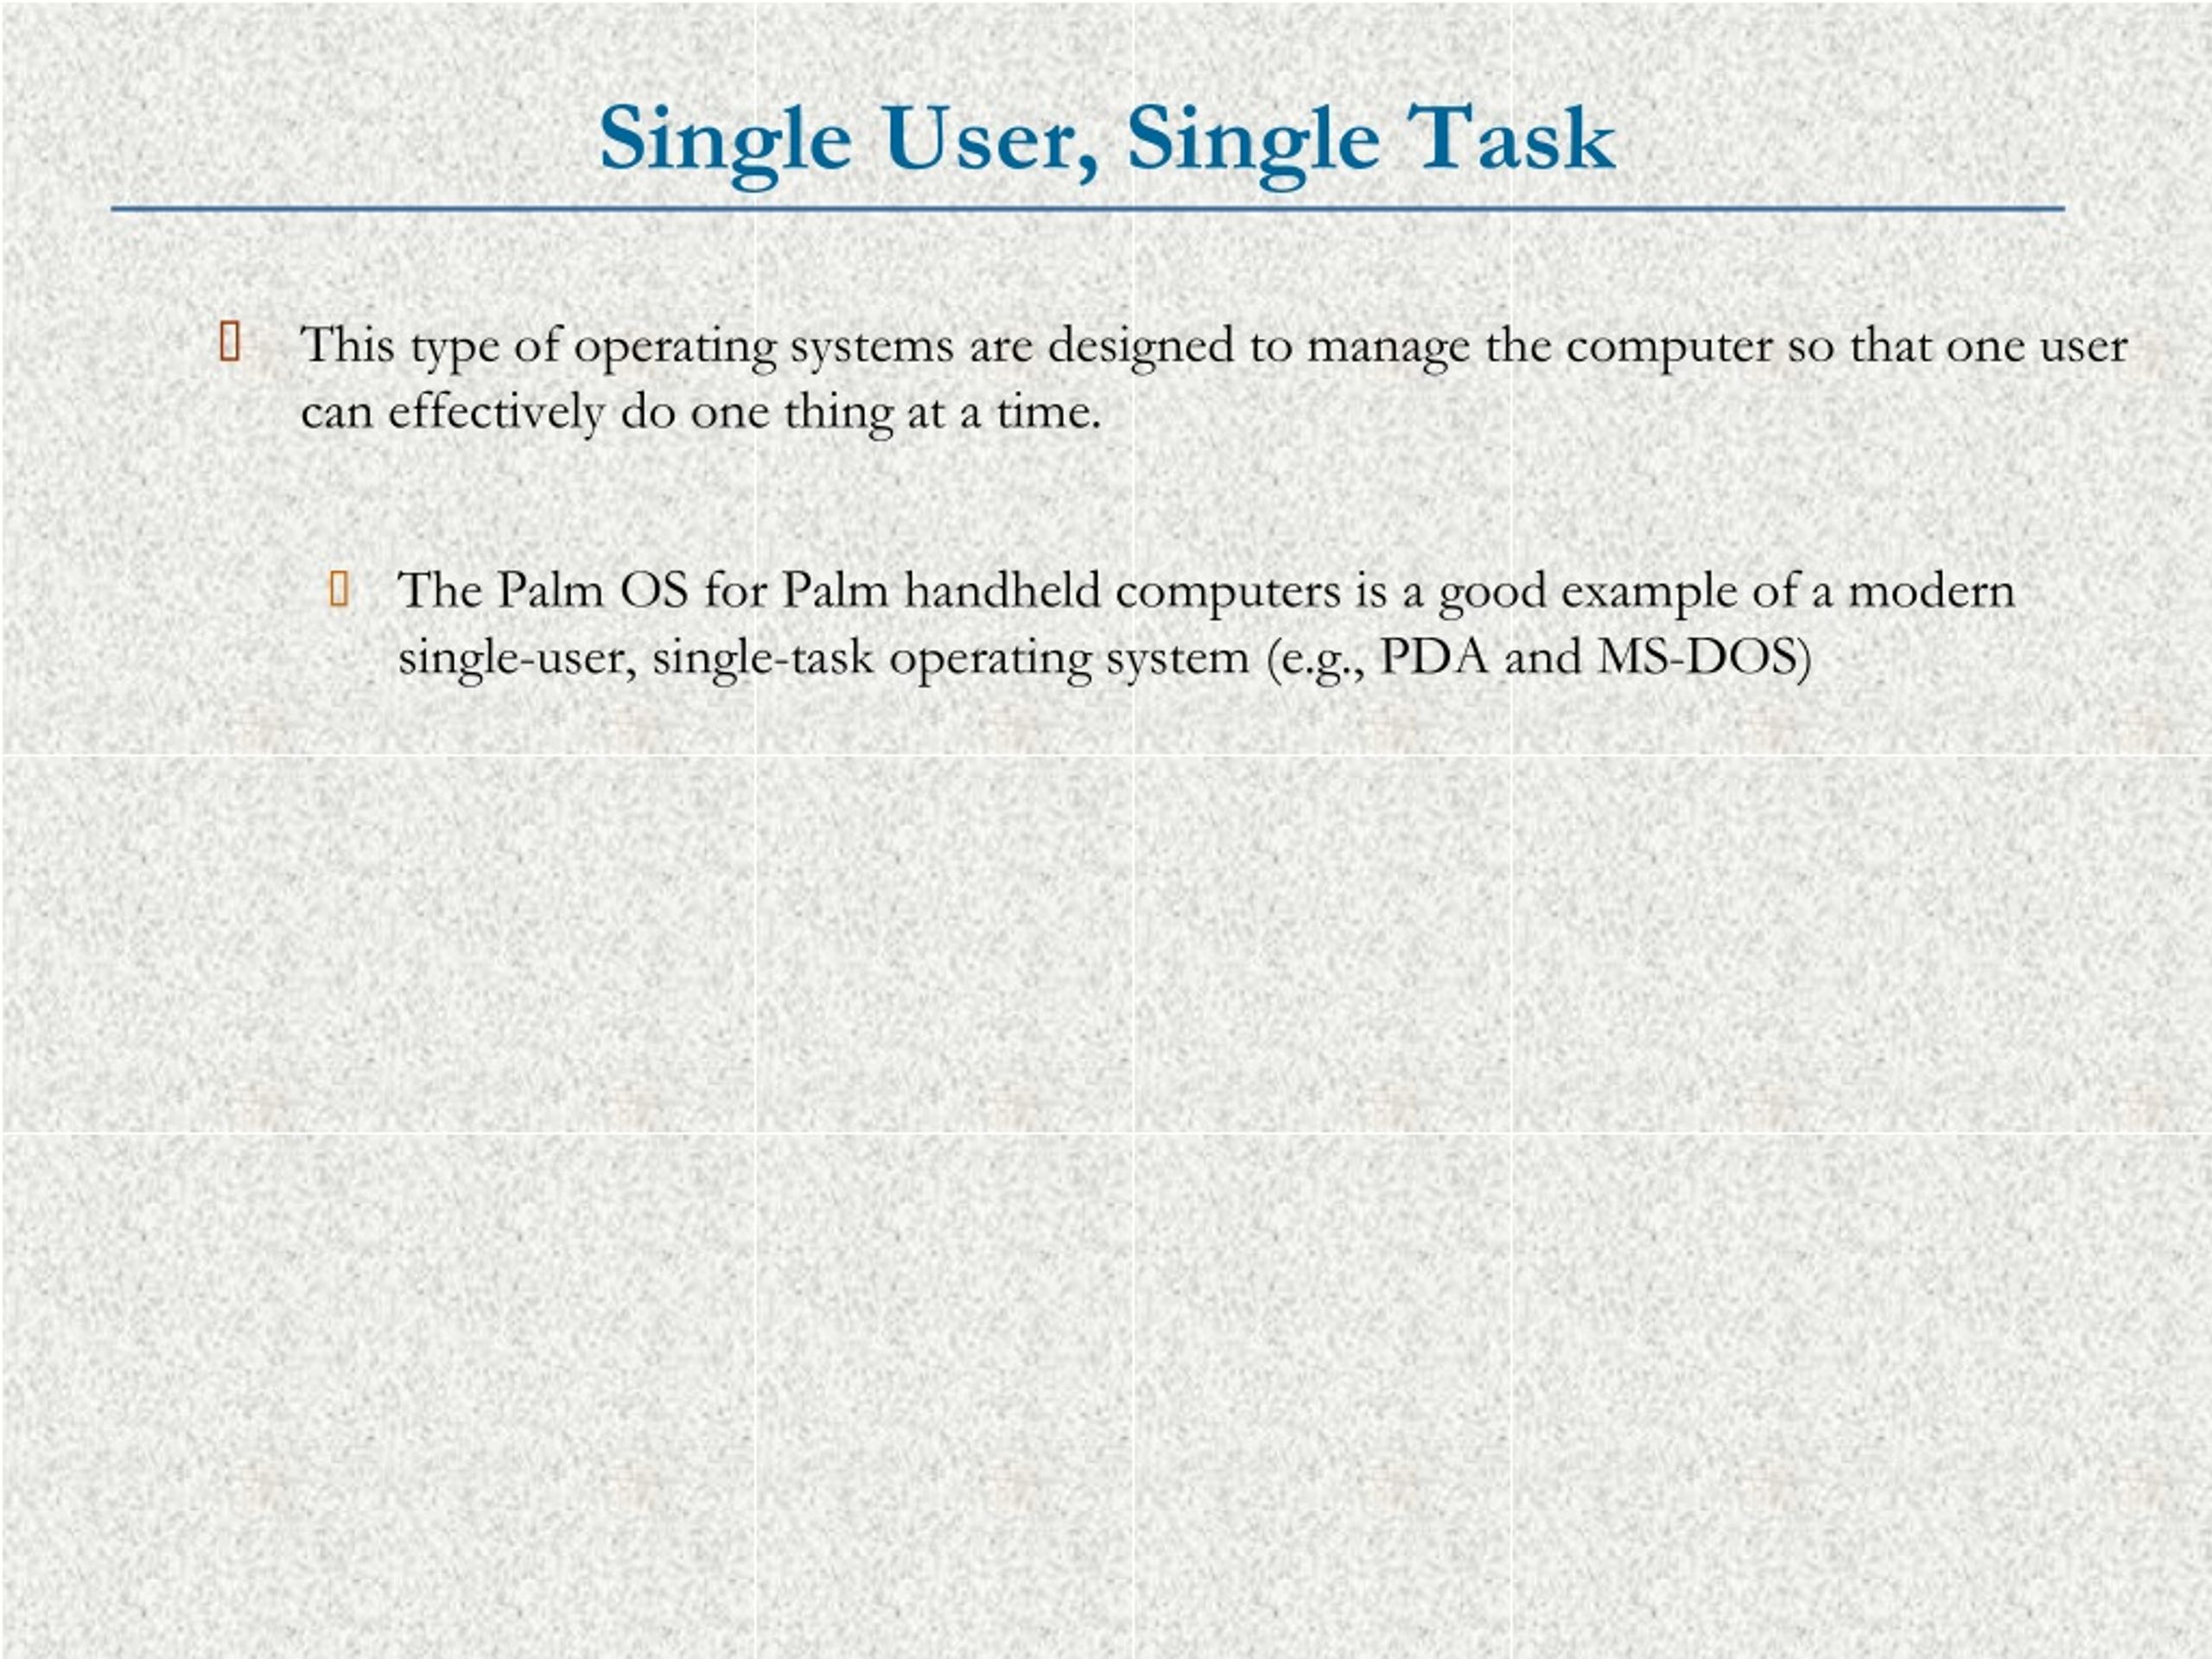 a single user single tasking on computer